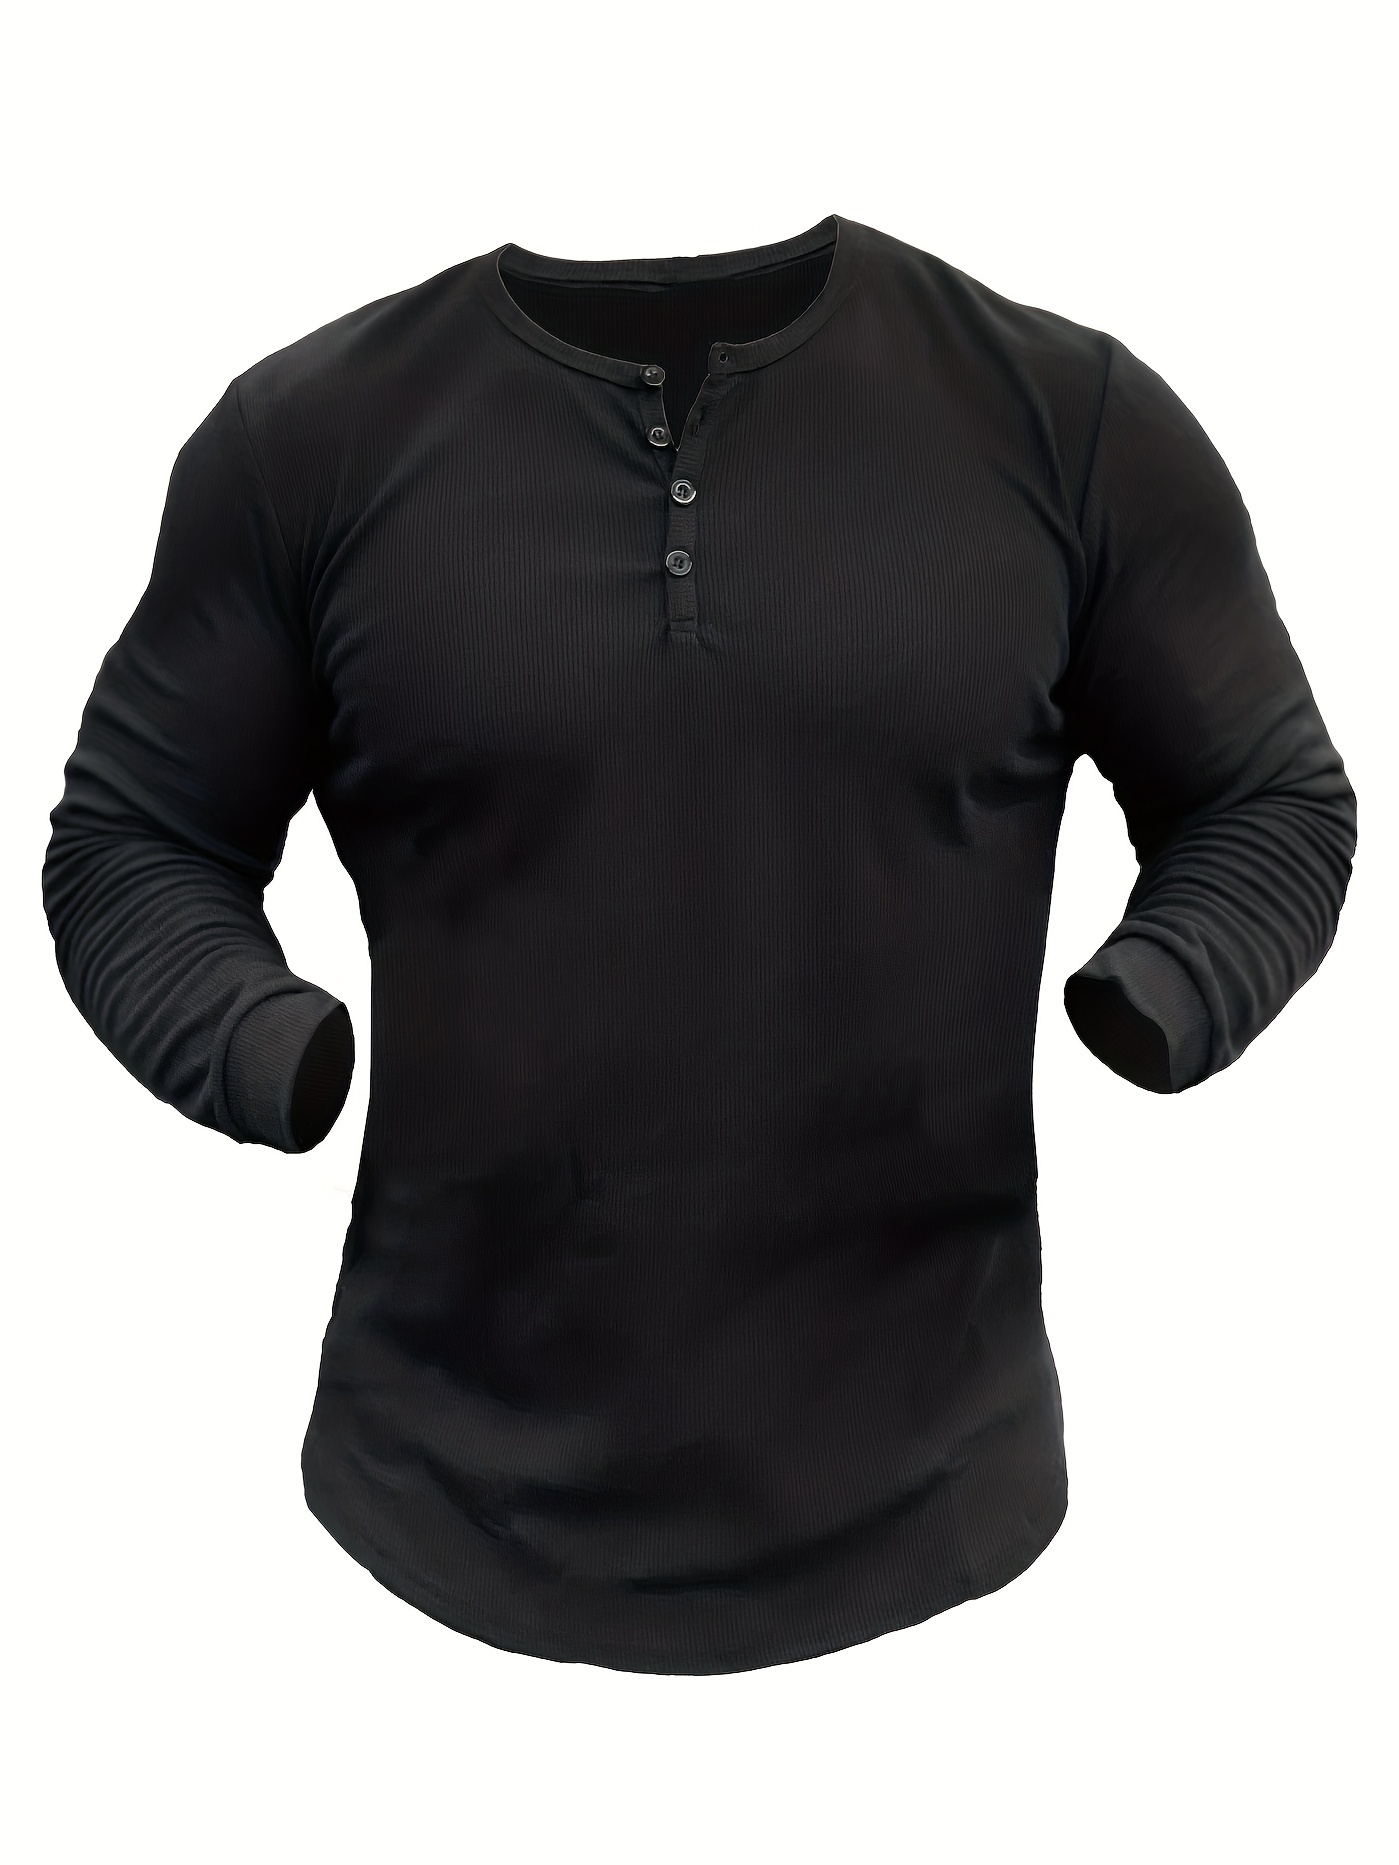 Men's - Long Sleeve Jersey Henley Top in Black